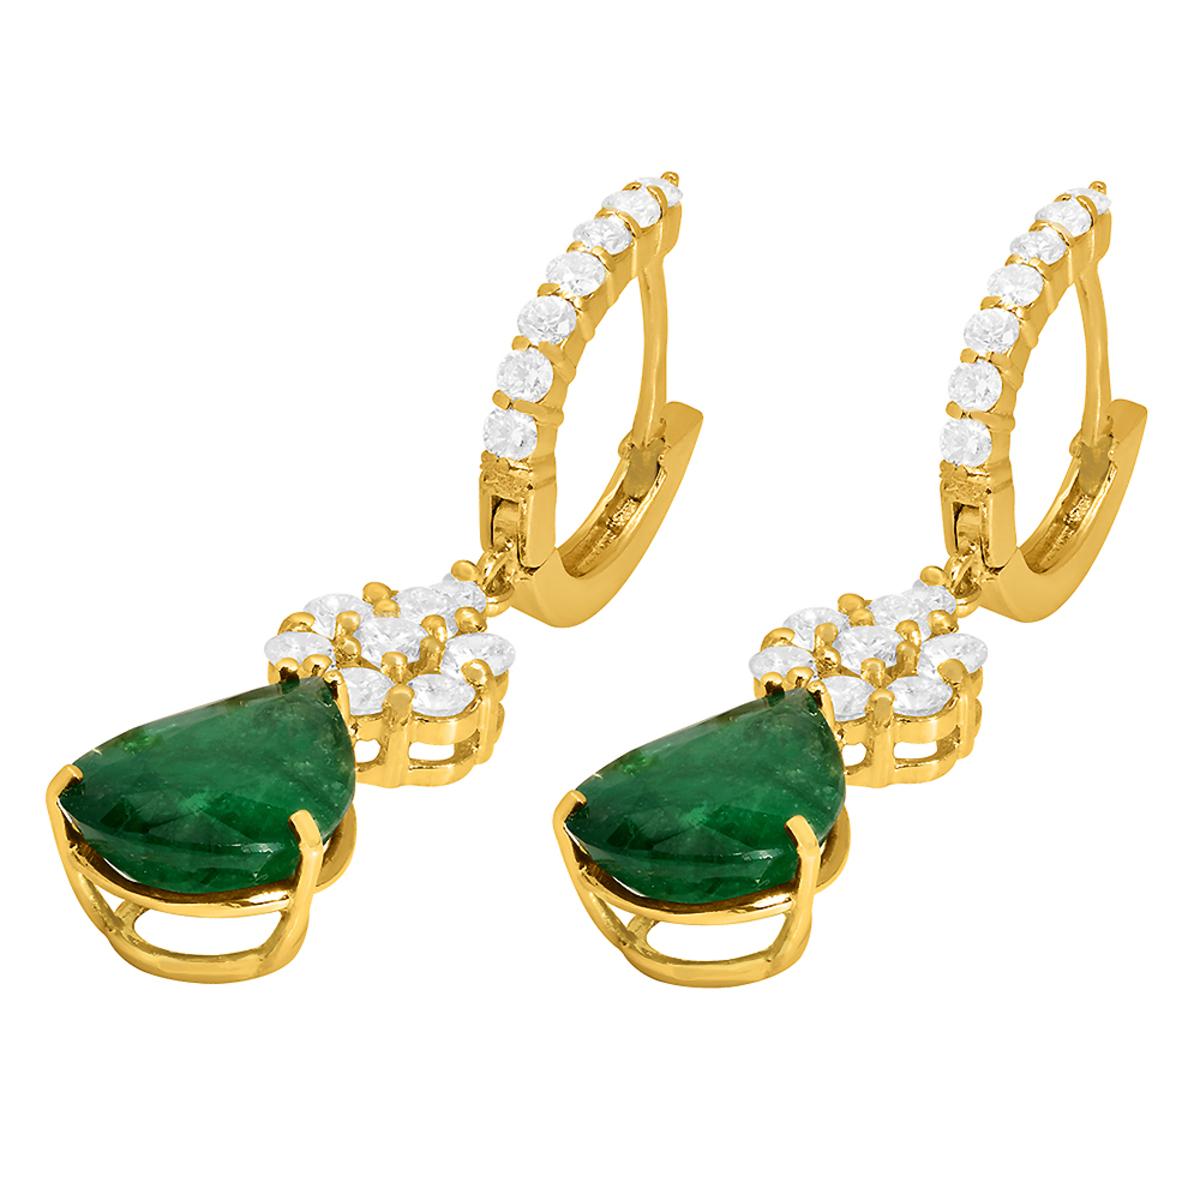 14k Yellow Gold 7.33ct Emerald 2.10ct Diamond Earrings